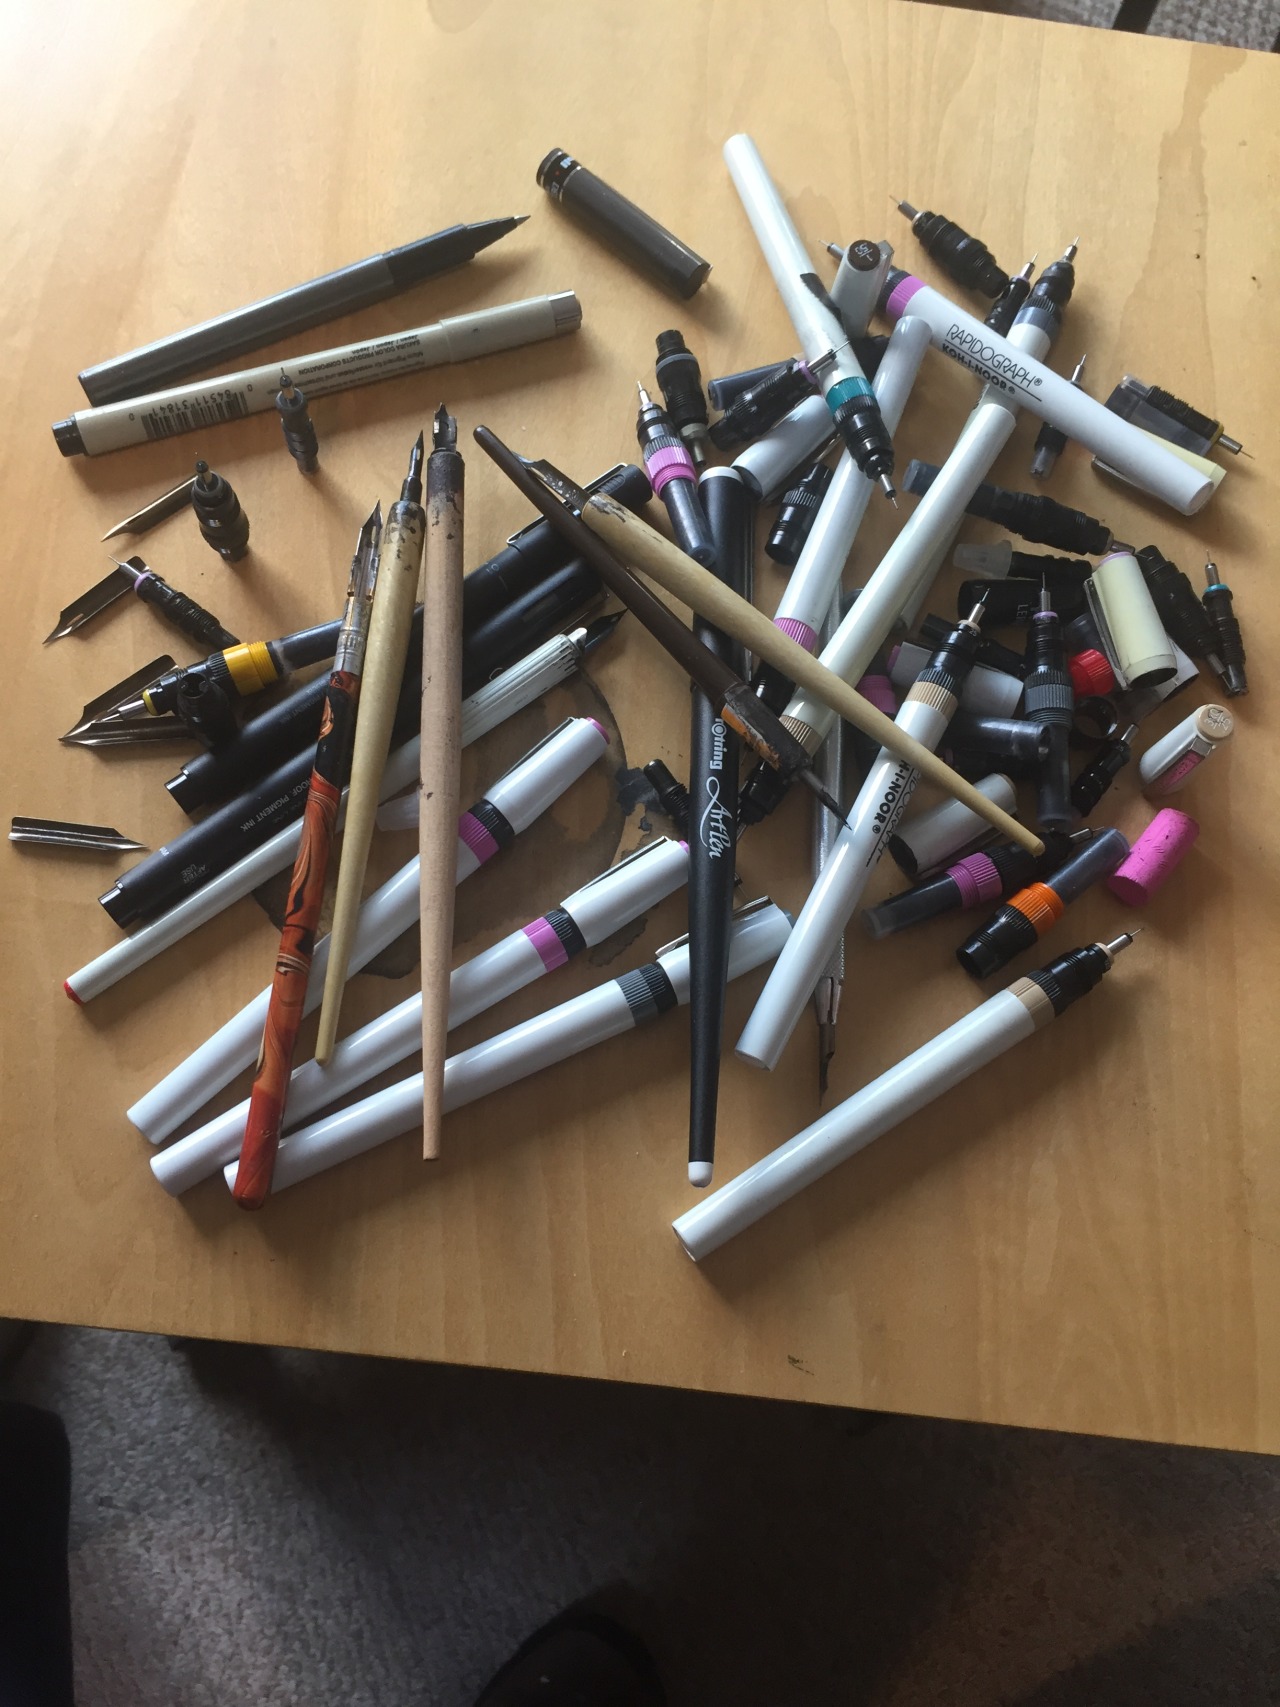 Pigment Pen Comparison (AKA Archival, Waterproof, Felt Tip Pens